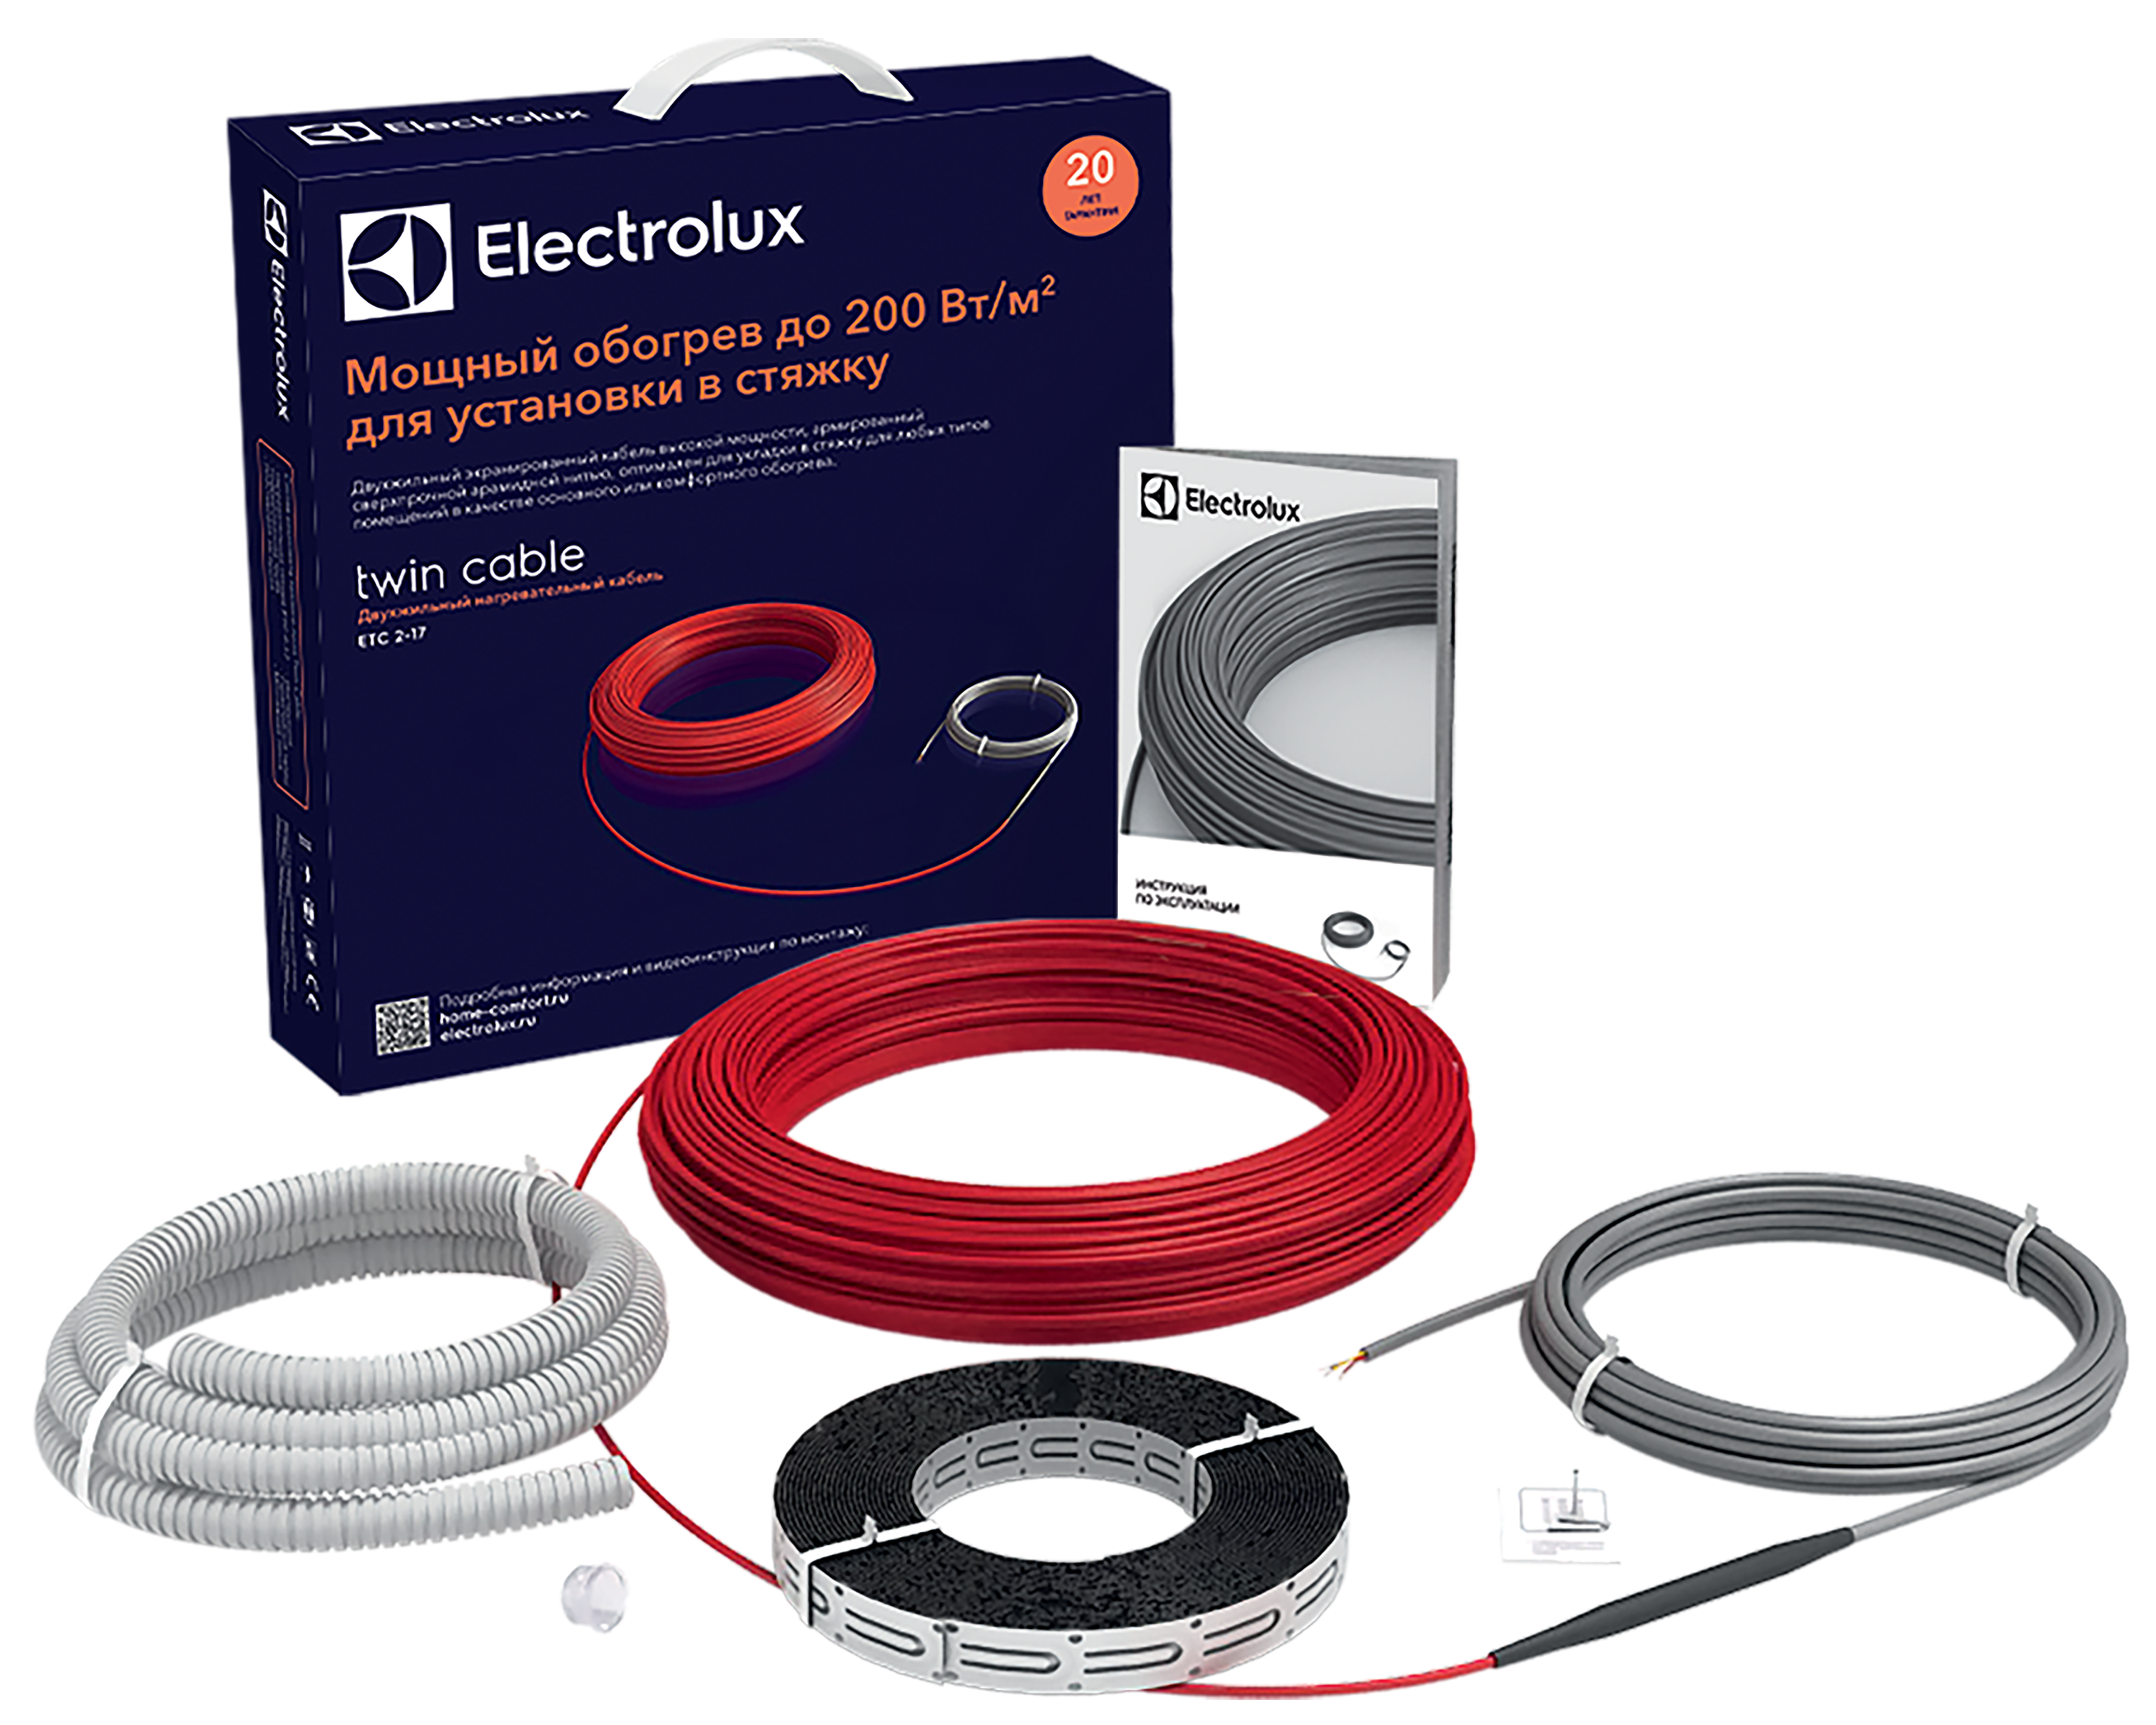 Теплый пол Electrolux под ламинат Electrolux Twin Cable ETC 2-17-1200